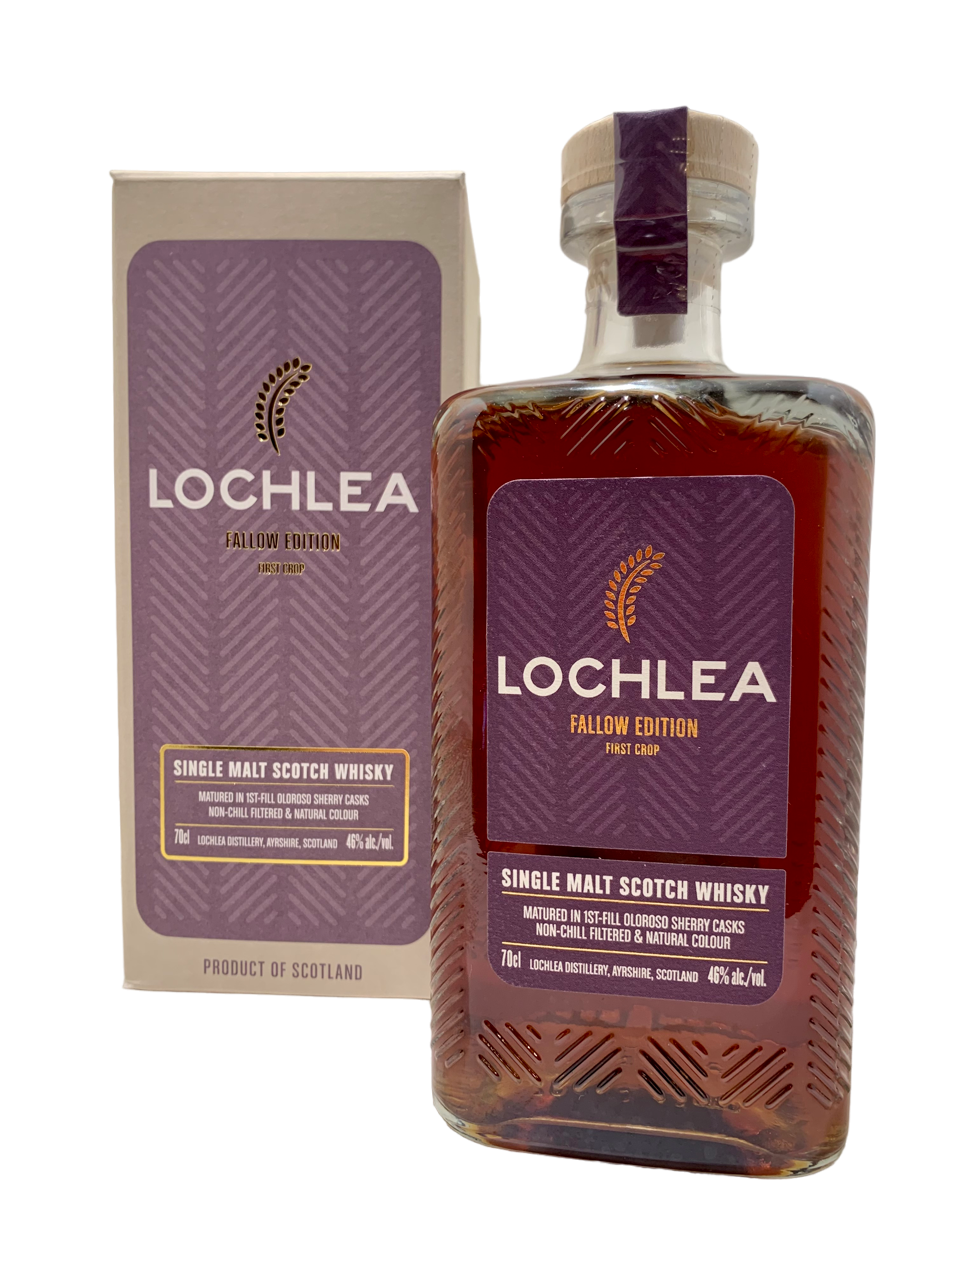 spirit spiritueux single malt scotch whisky ecosse scottish lochlea fallow edition first crop matured in first fill oloroso sherry casks